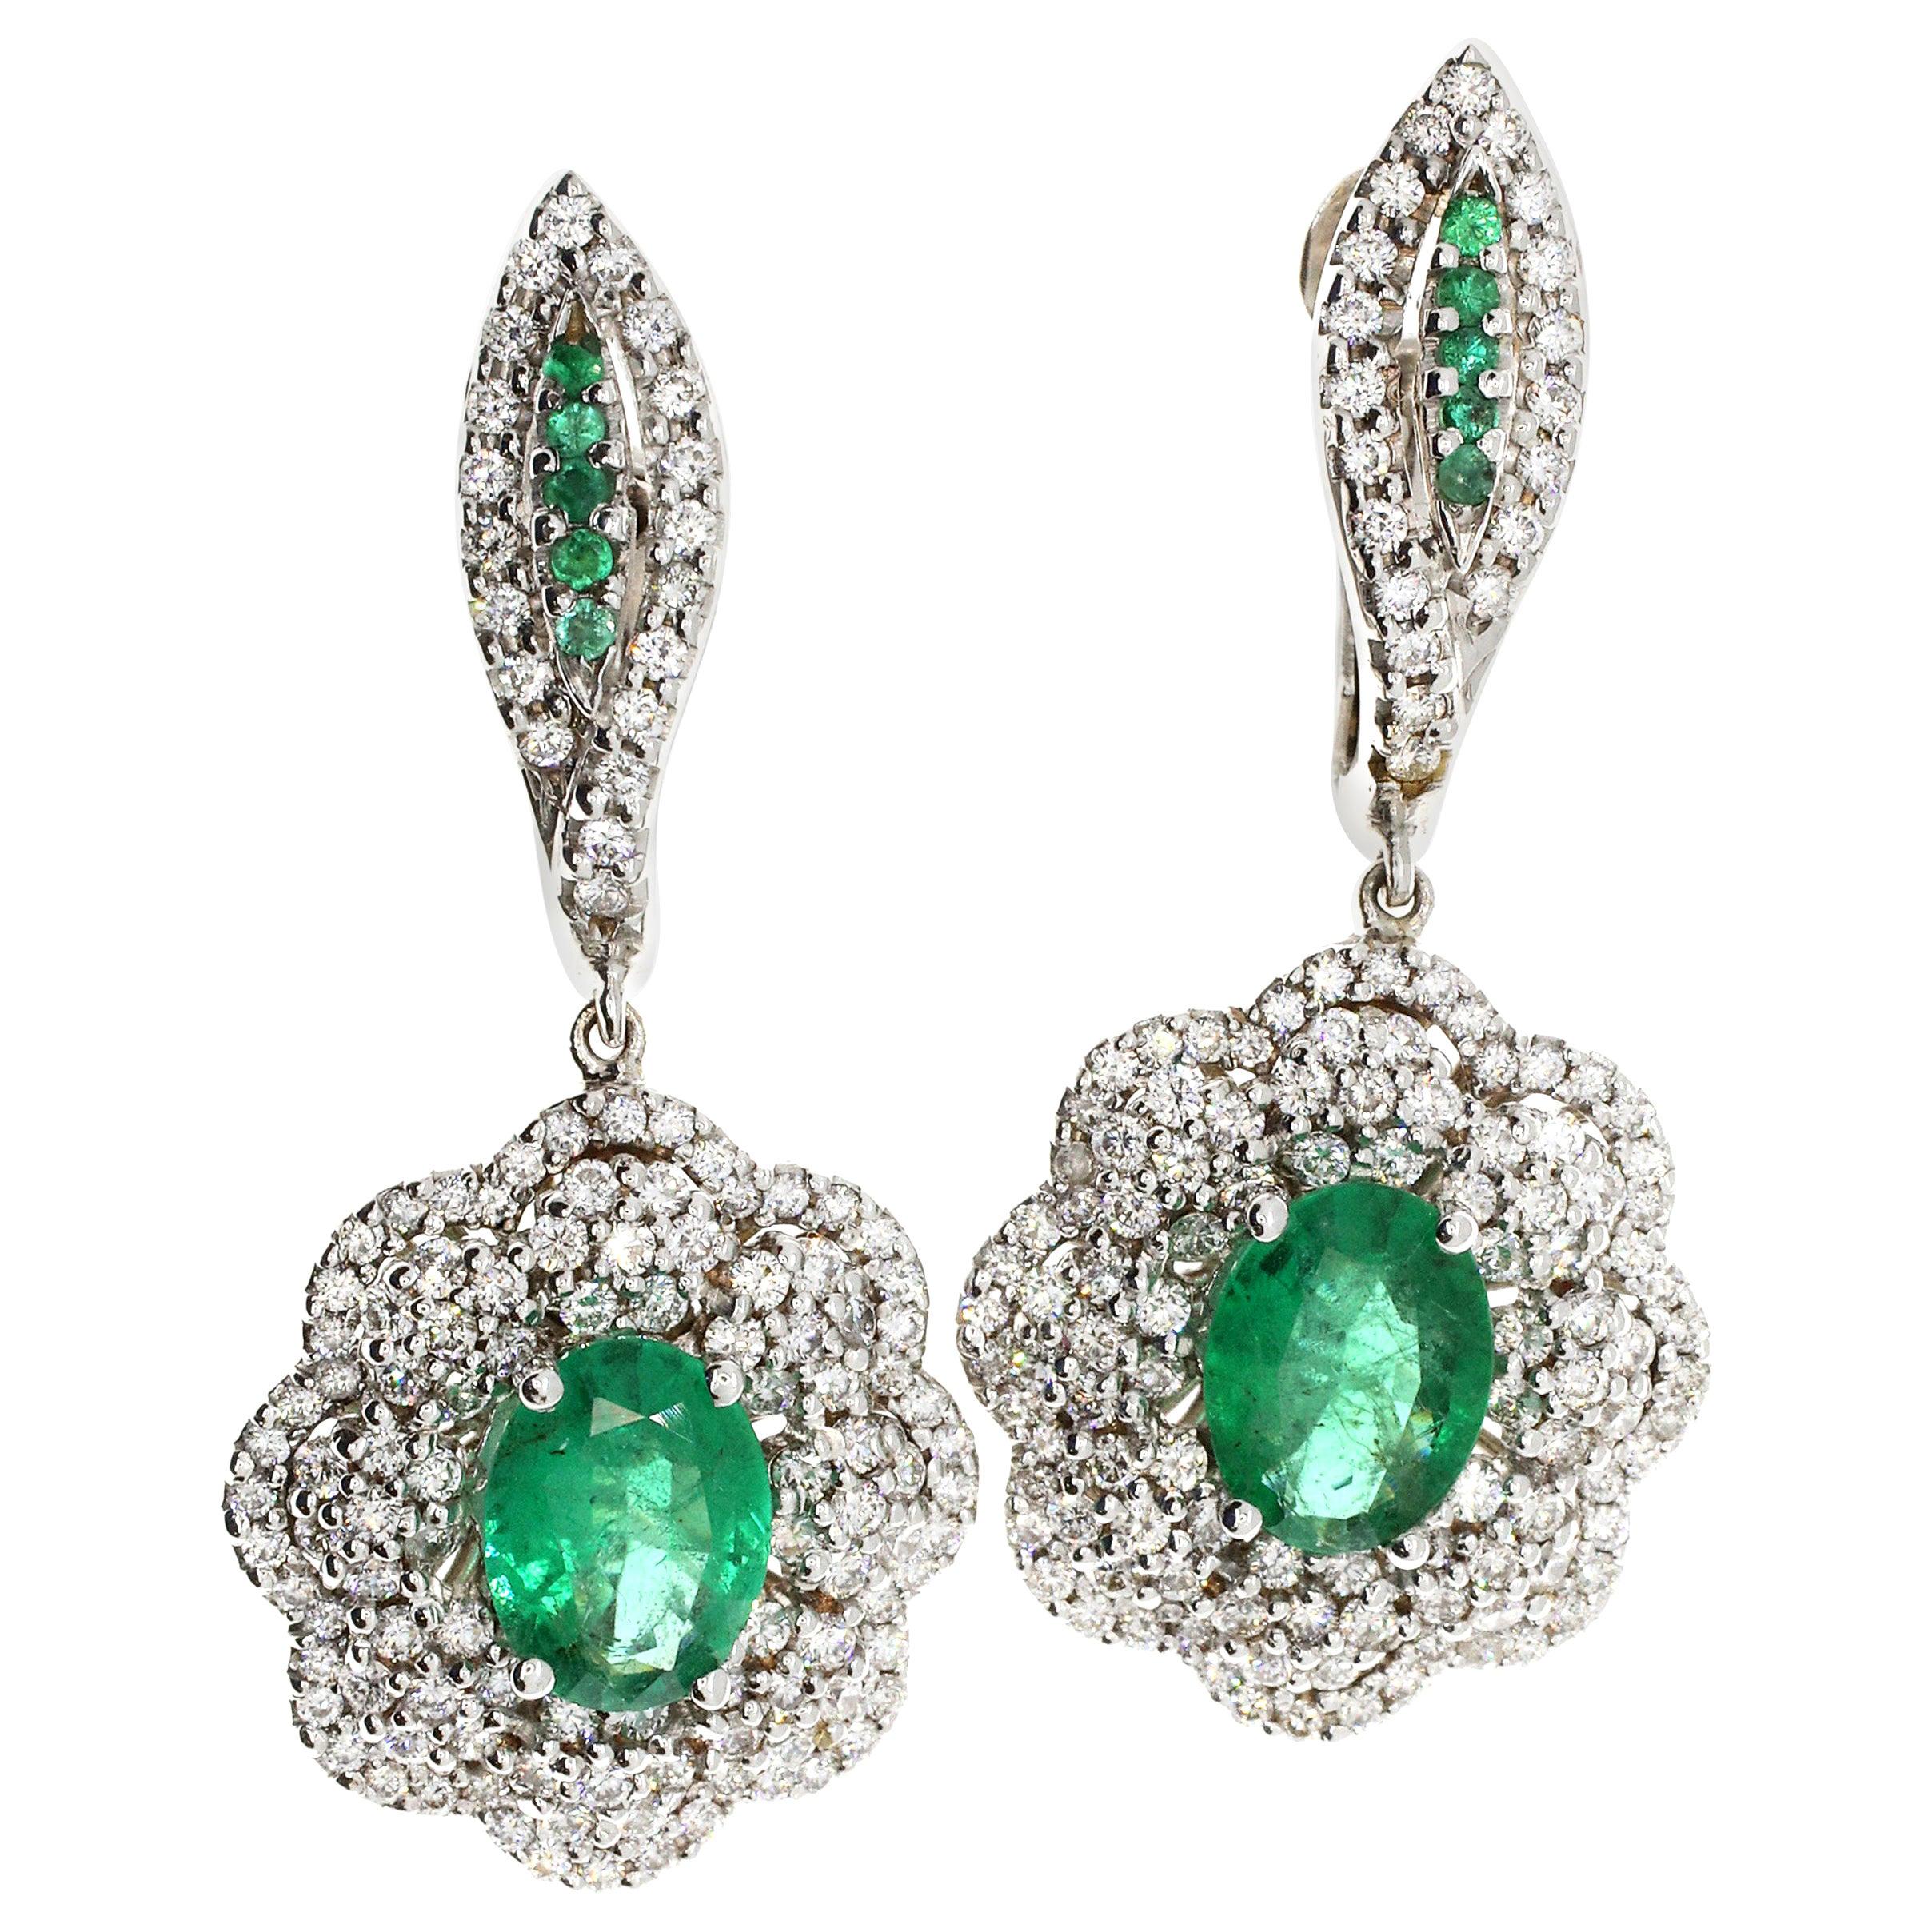 21st Century 18 Karat White Gold 1.48 Carats Diamond and Emerald Earrings 